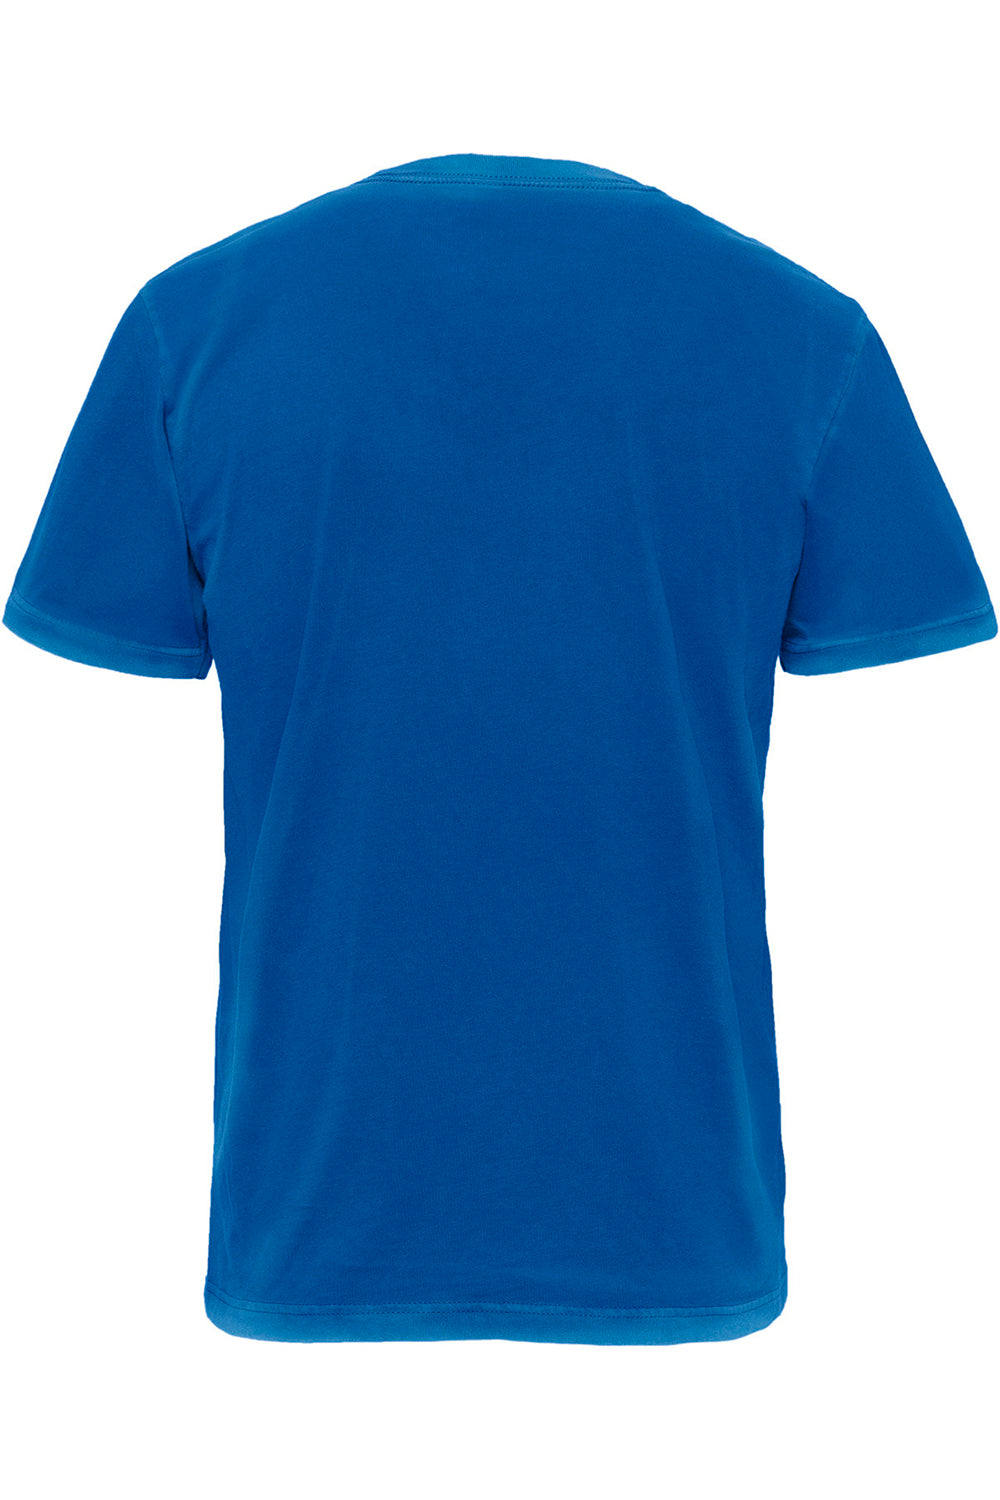 Next Level 3600SW Mens Soft Wash Short Sleeve Crewneck T-Shirt Royal Blue Flat Back